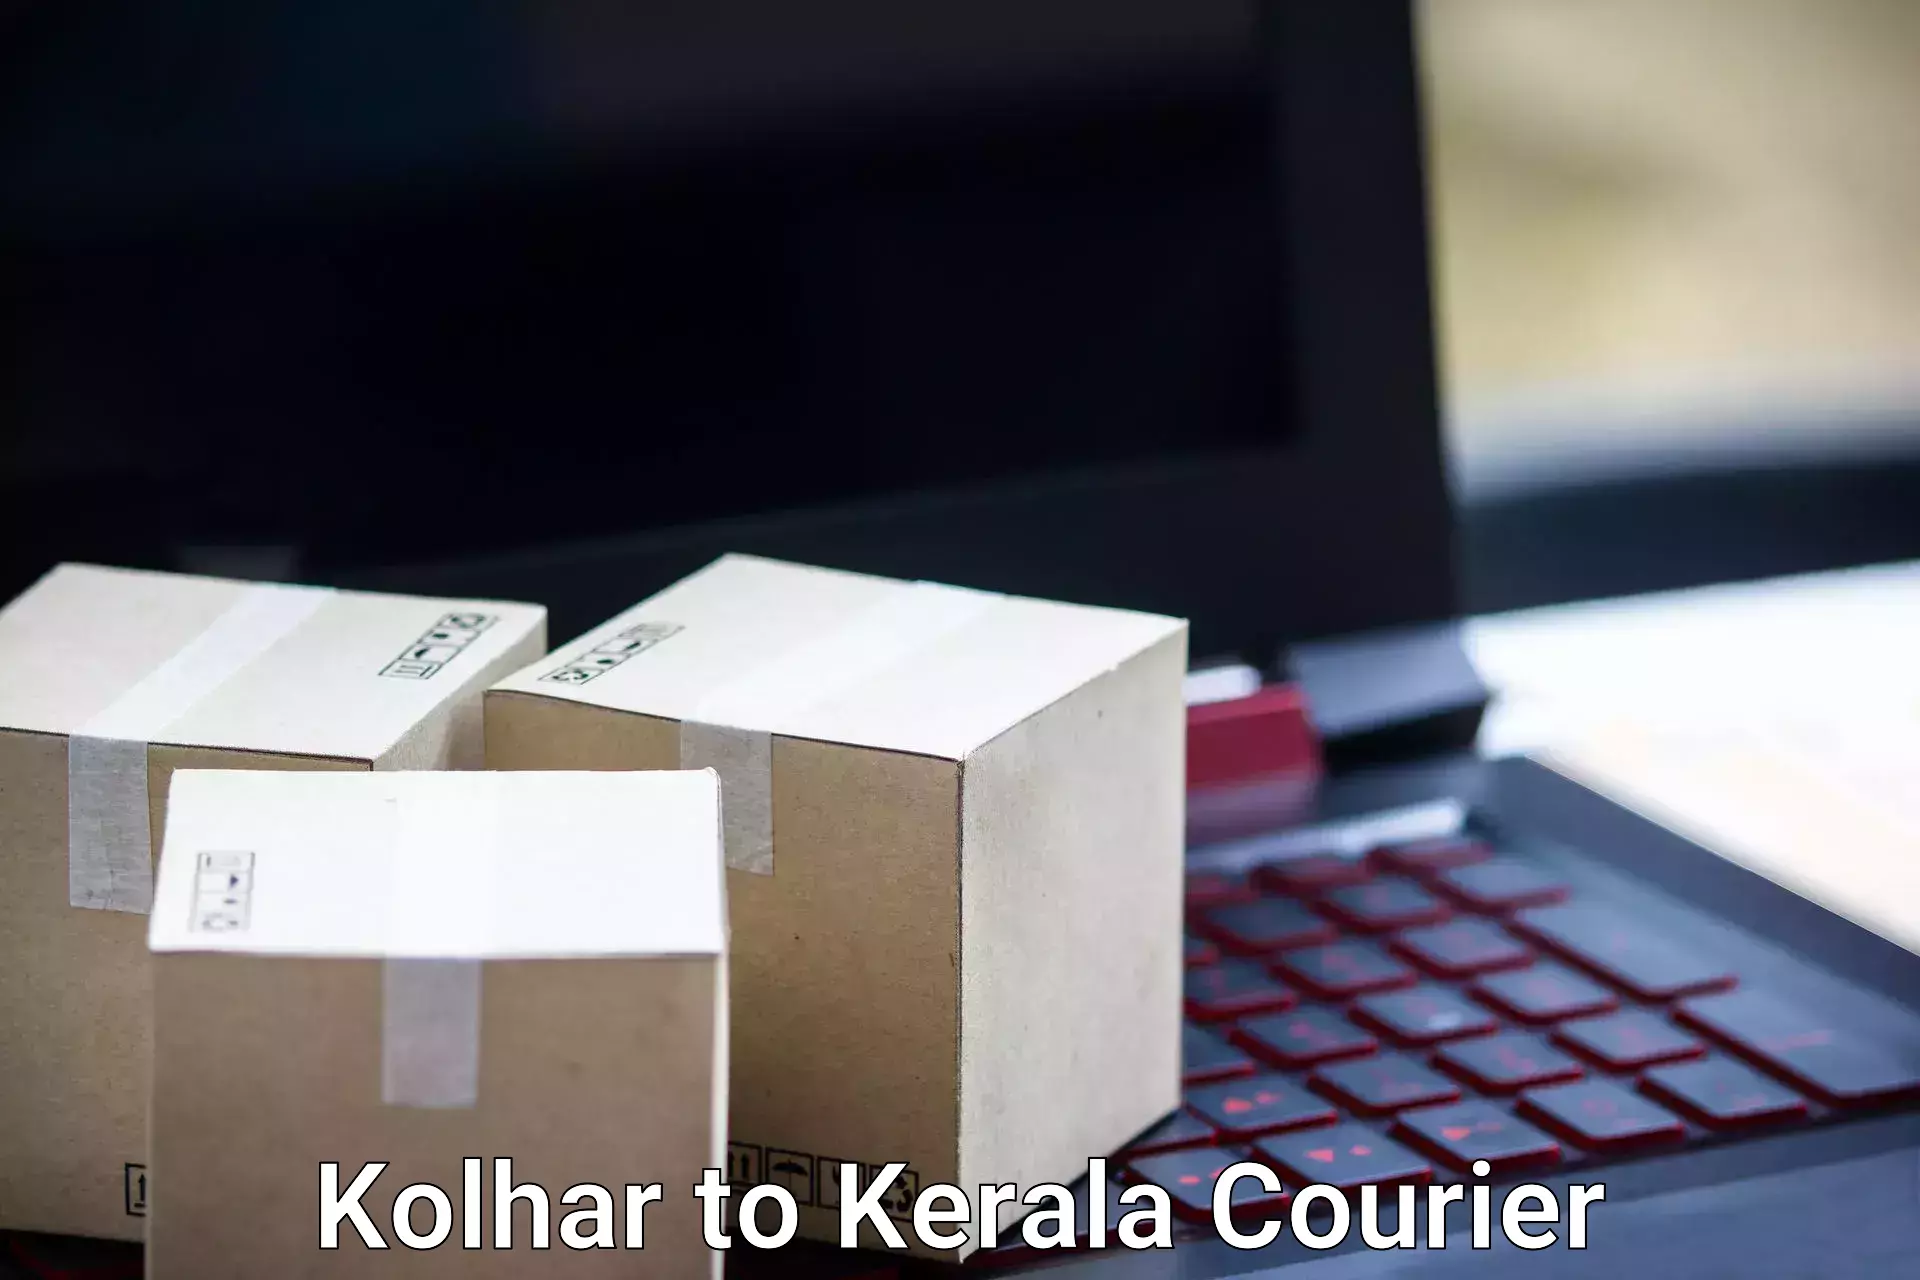 Same day luggage service Kolhar to Kerala